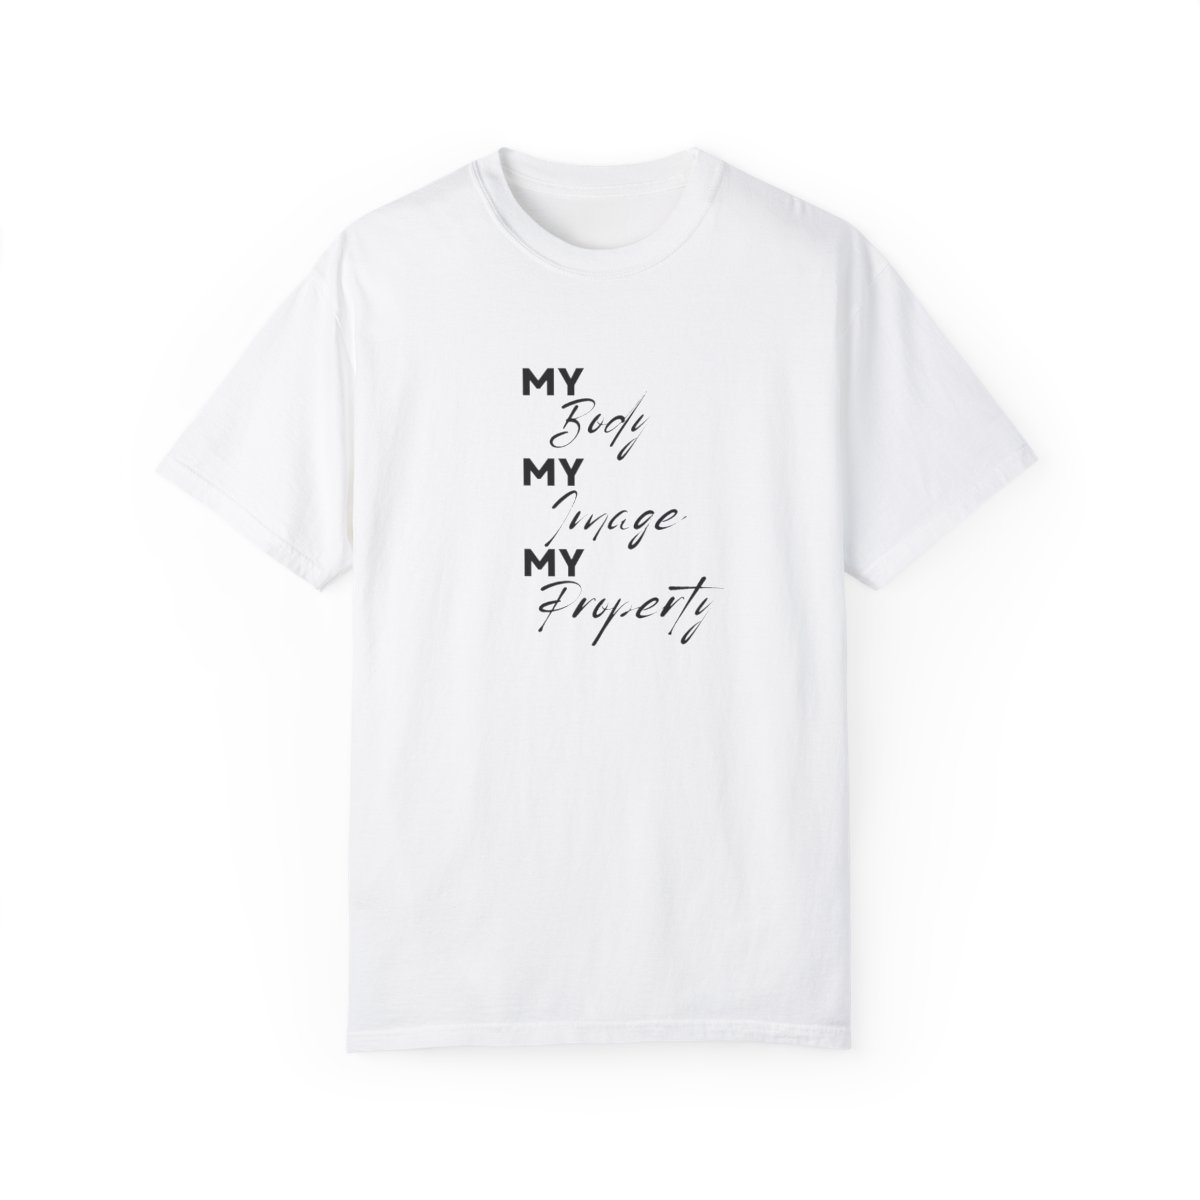 MY Body MY Image MY Property Unisex Garment-Dyed T-shirt